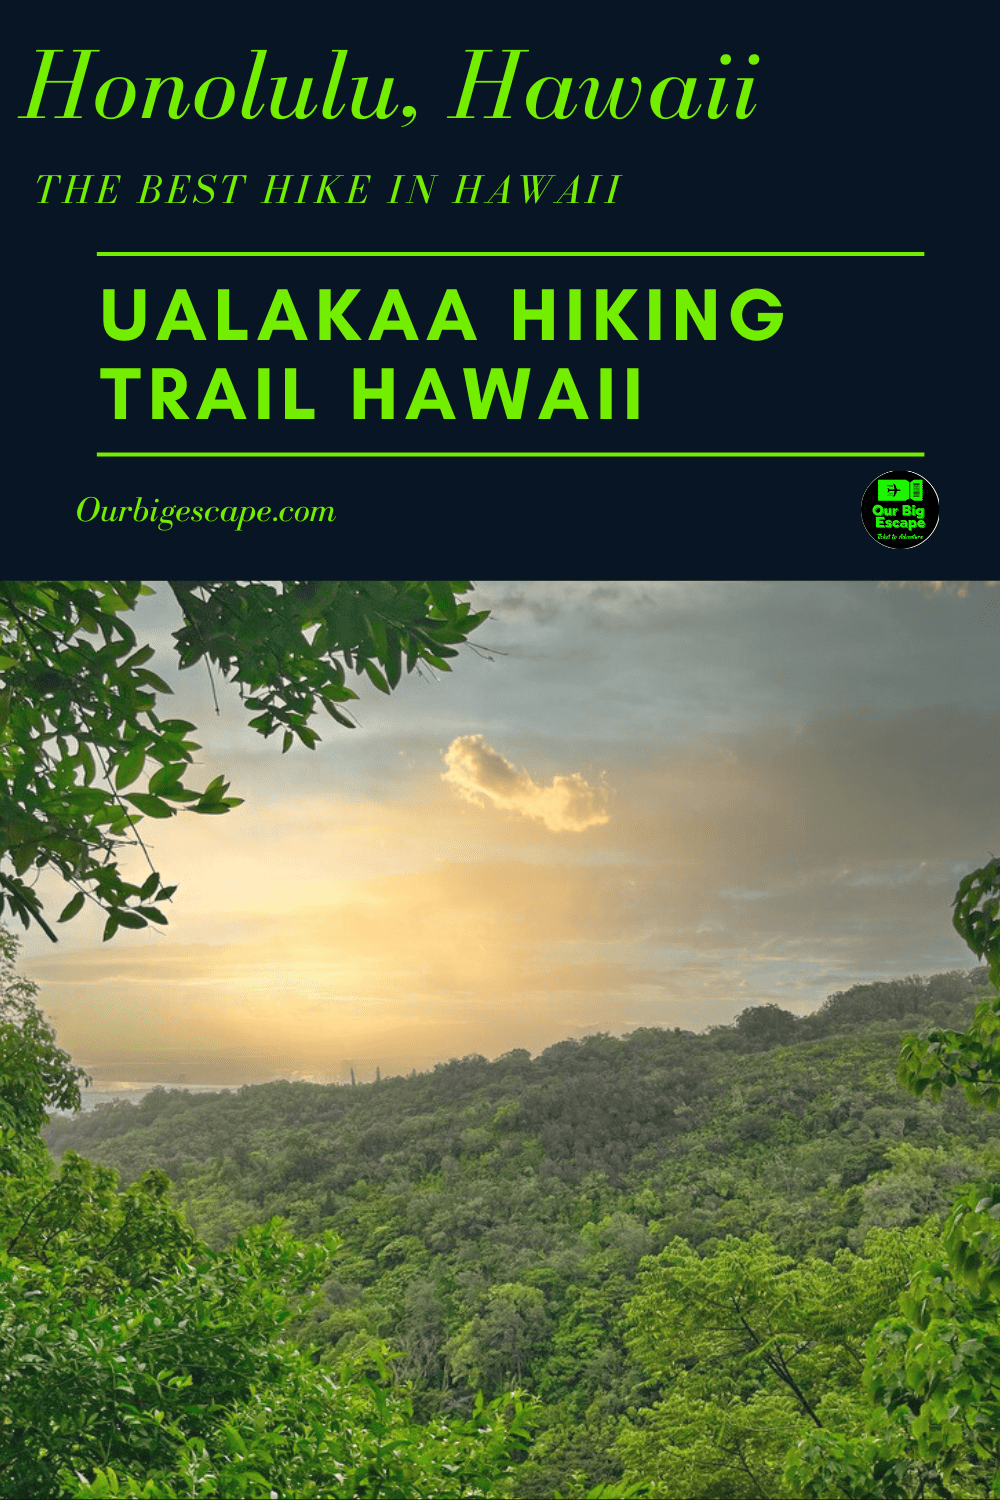 The 4 Great Ualakaa Trail Hiking Options